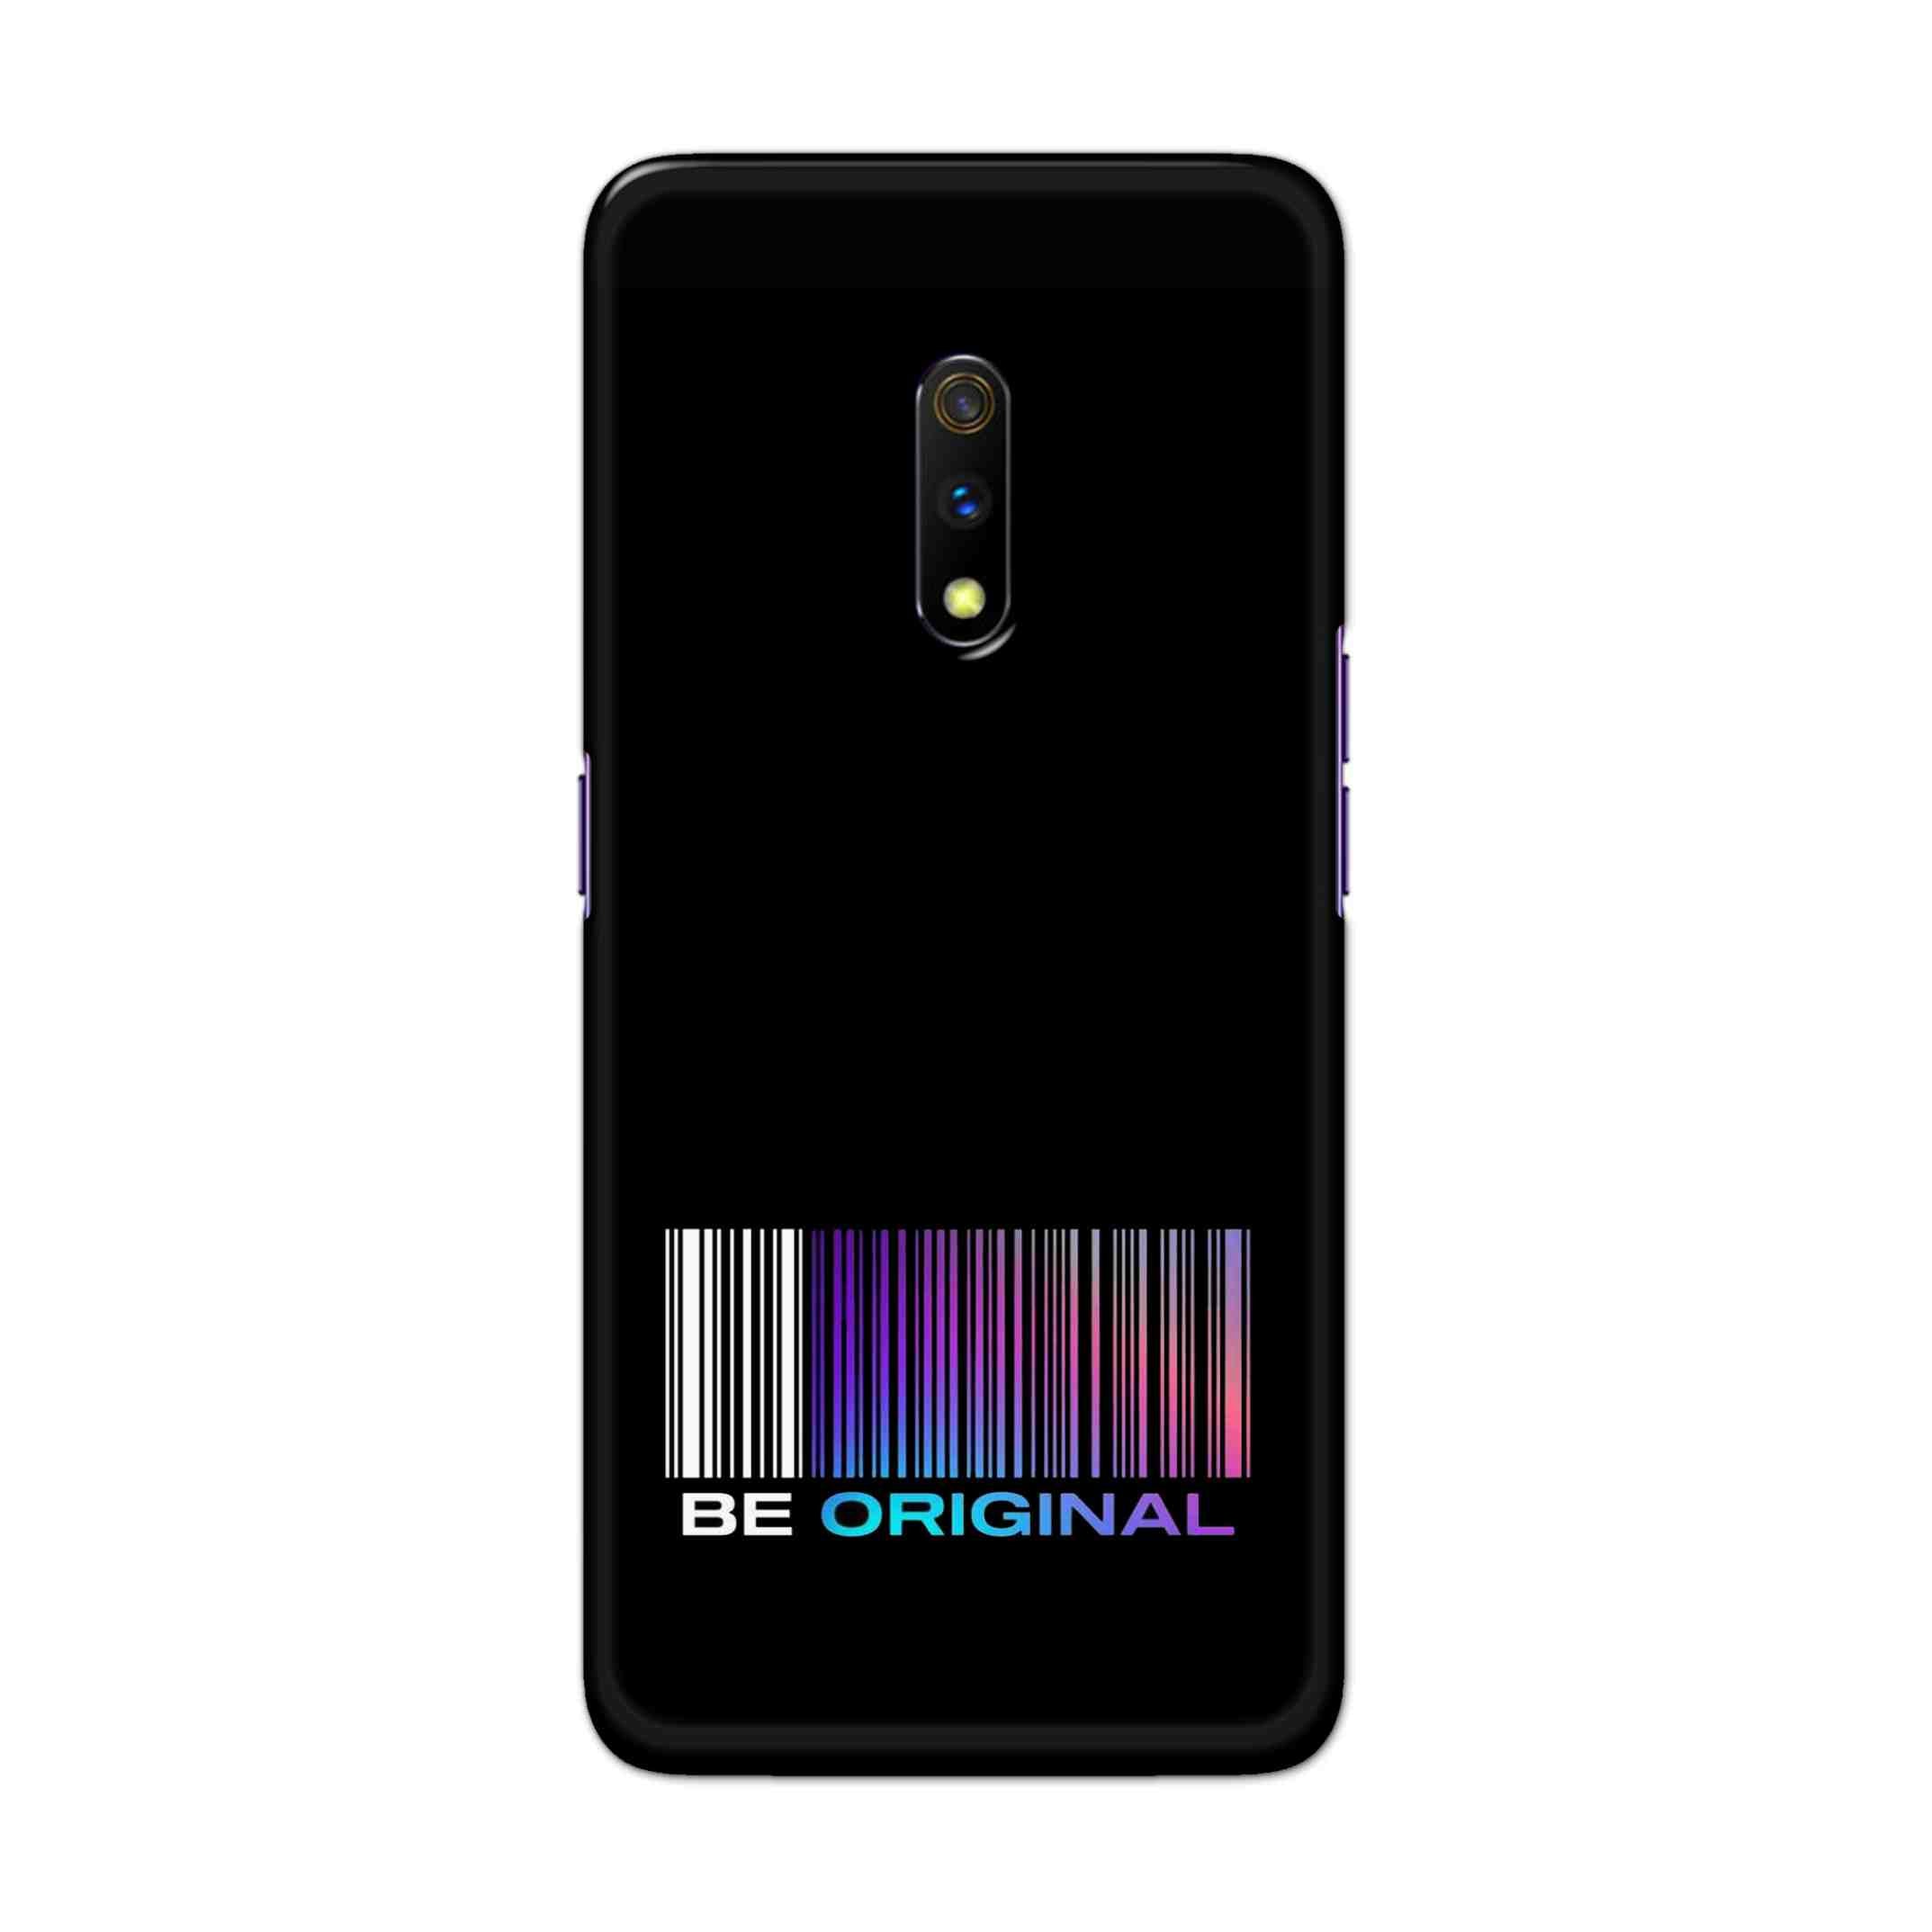 Buy Be Original Hard Back Mobile Phone Case Cover For Oppo Realme X Online